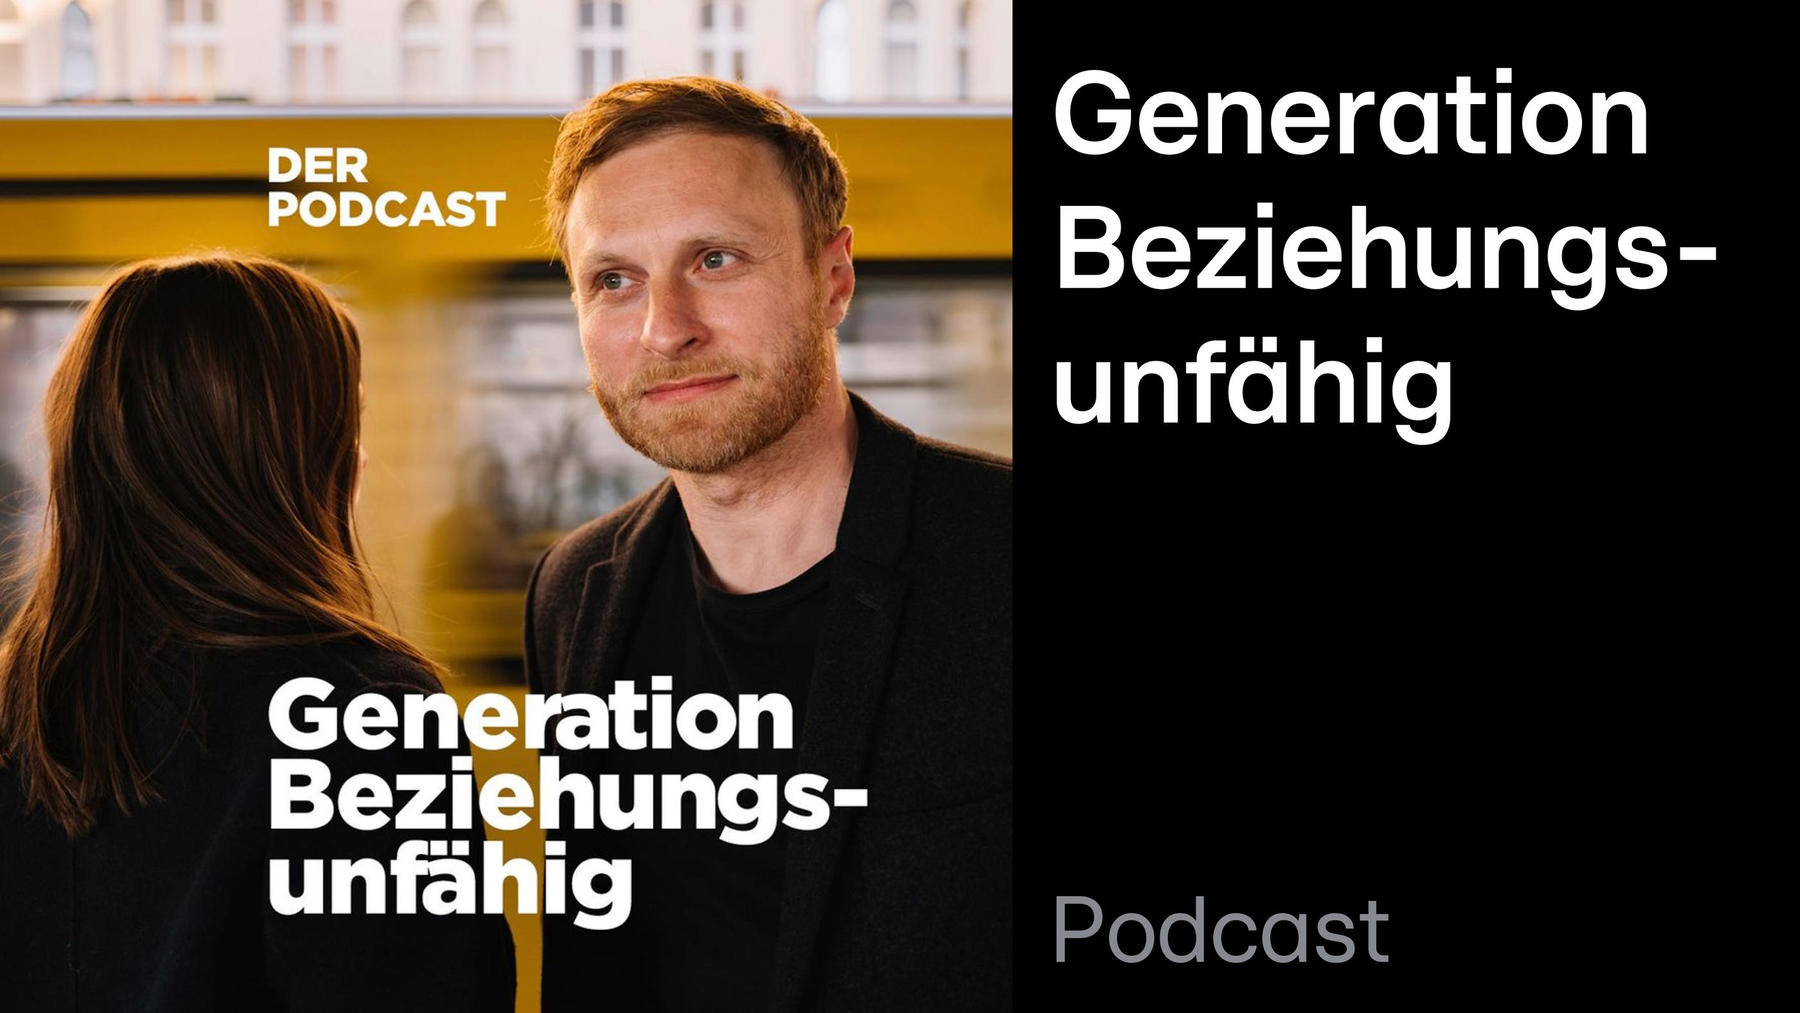 Podcast: Generation Beziehungsunfähig